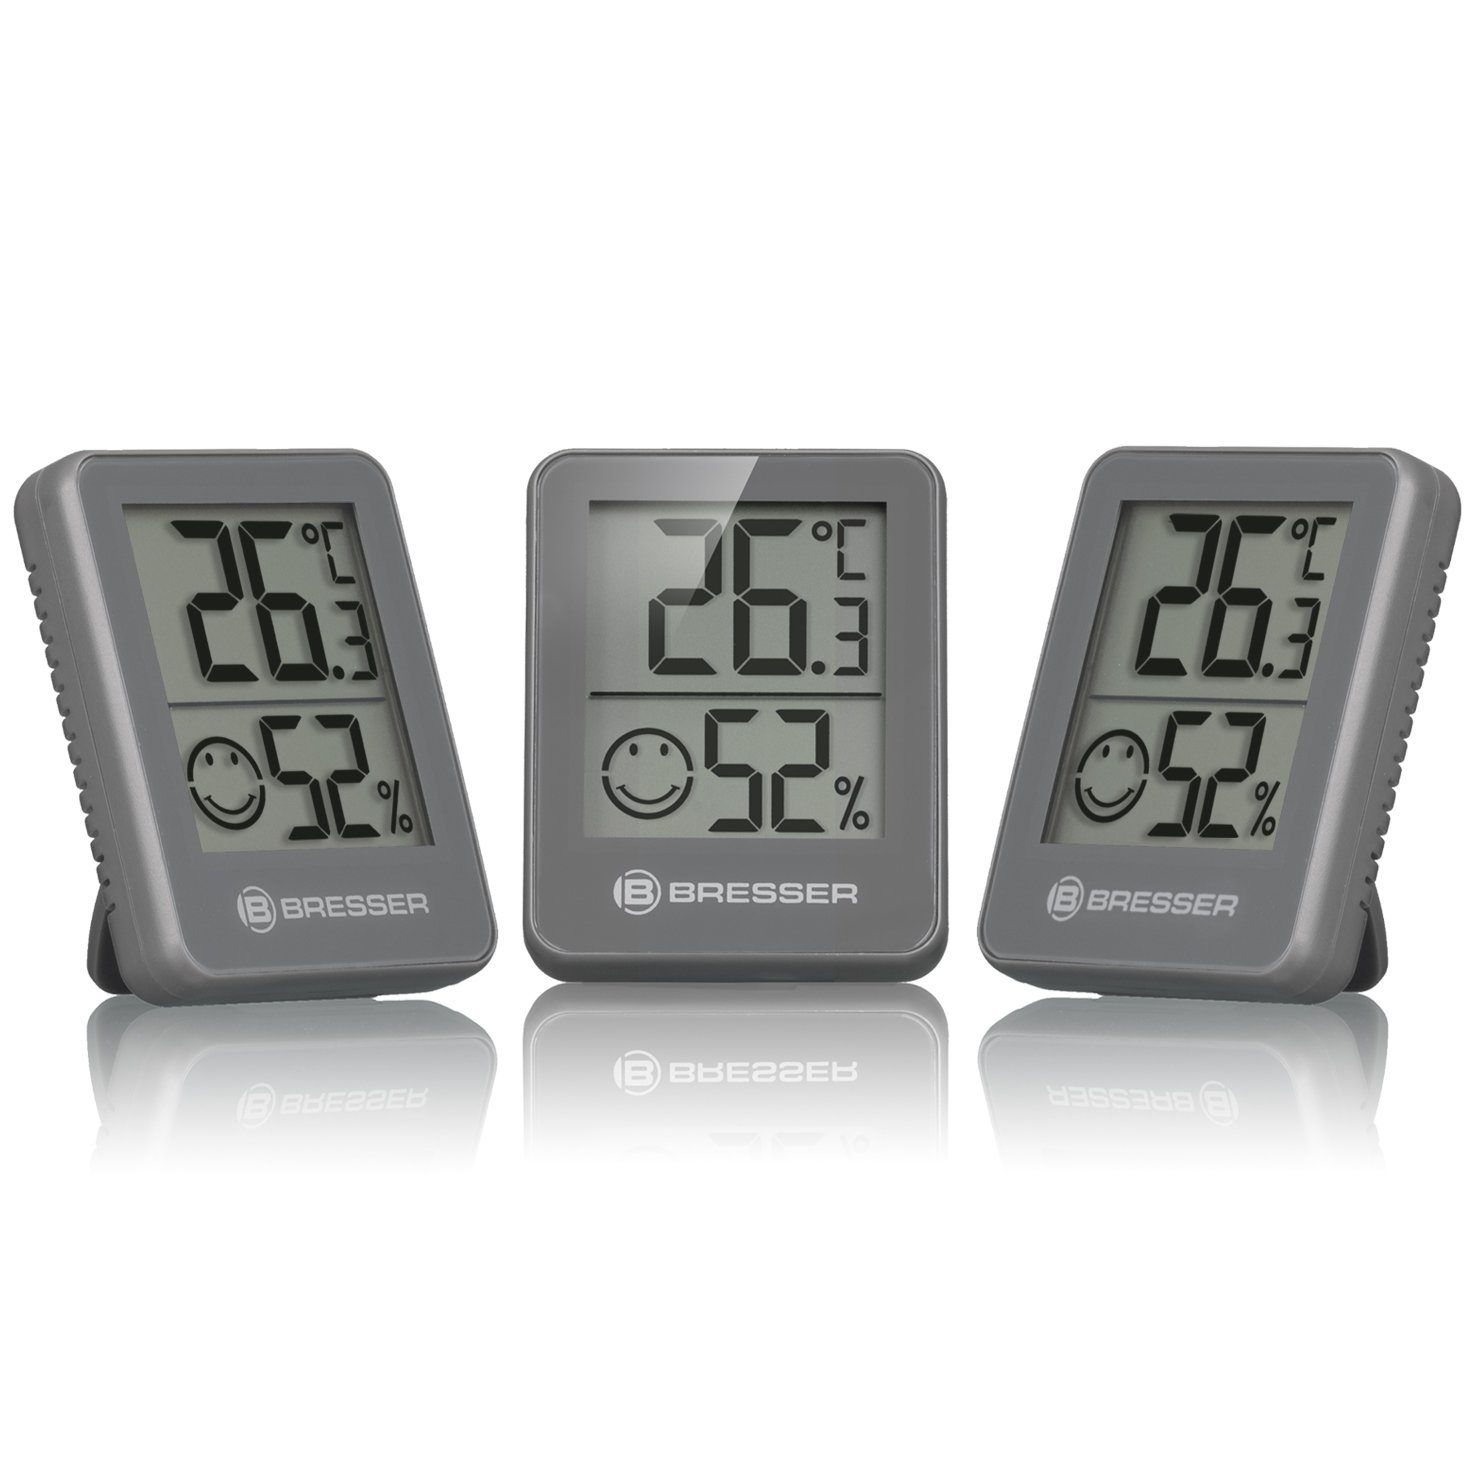 grau 3er Temeo Indikator BRESSER Hygro / Thermometer Hygrometer Temperaturmessgerät Set